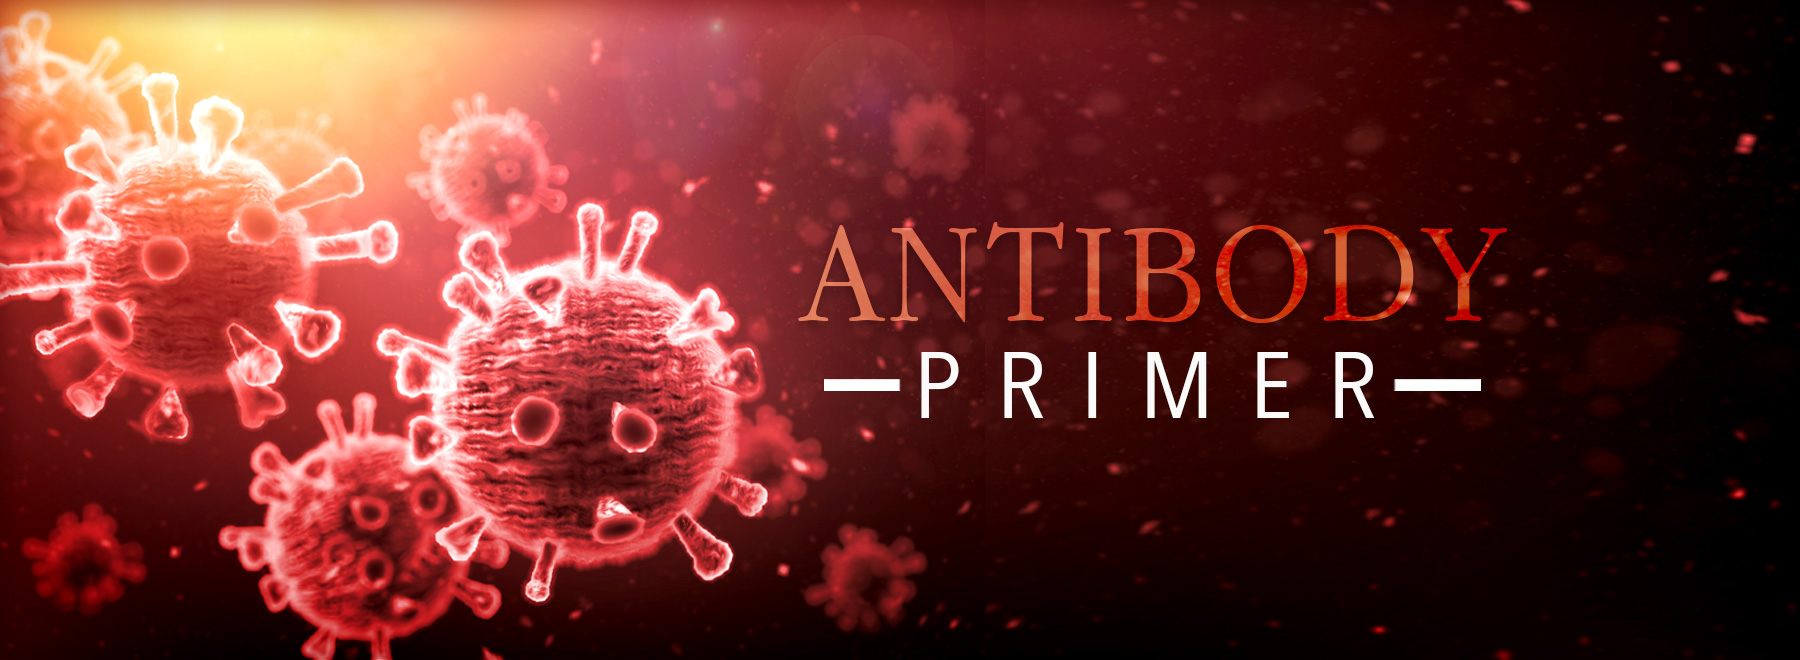 Antibody microscopic illustration